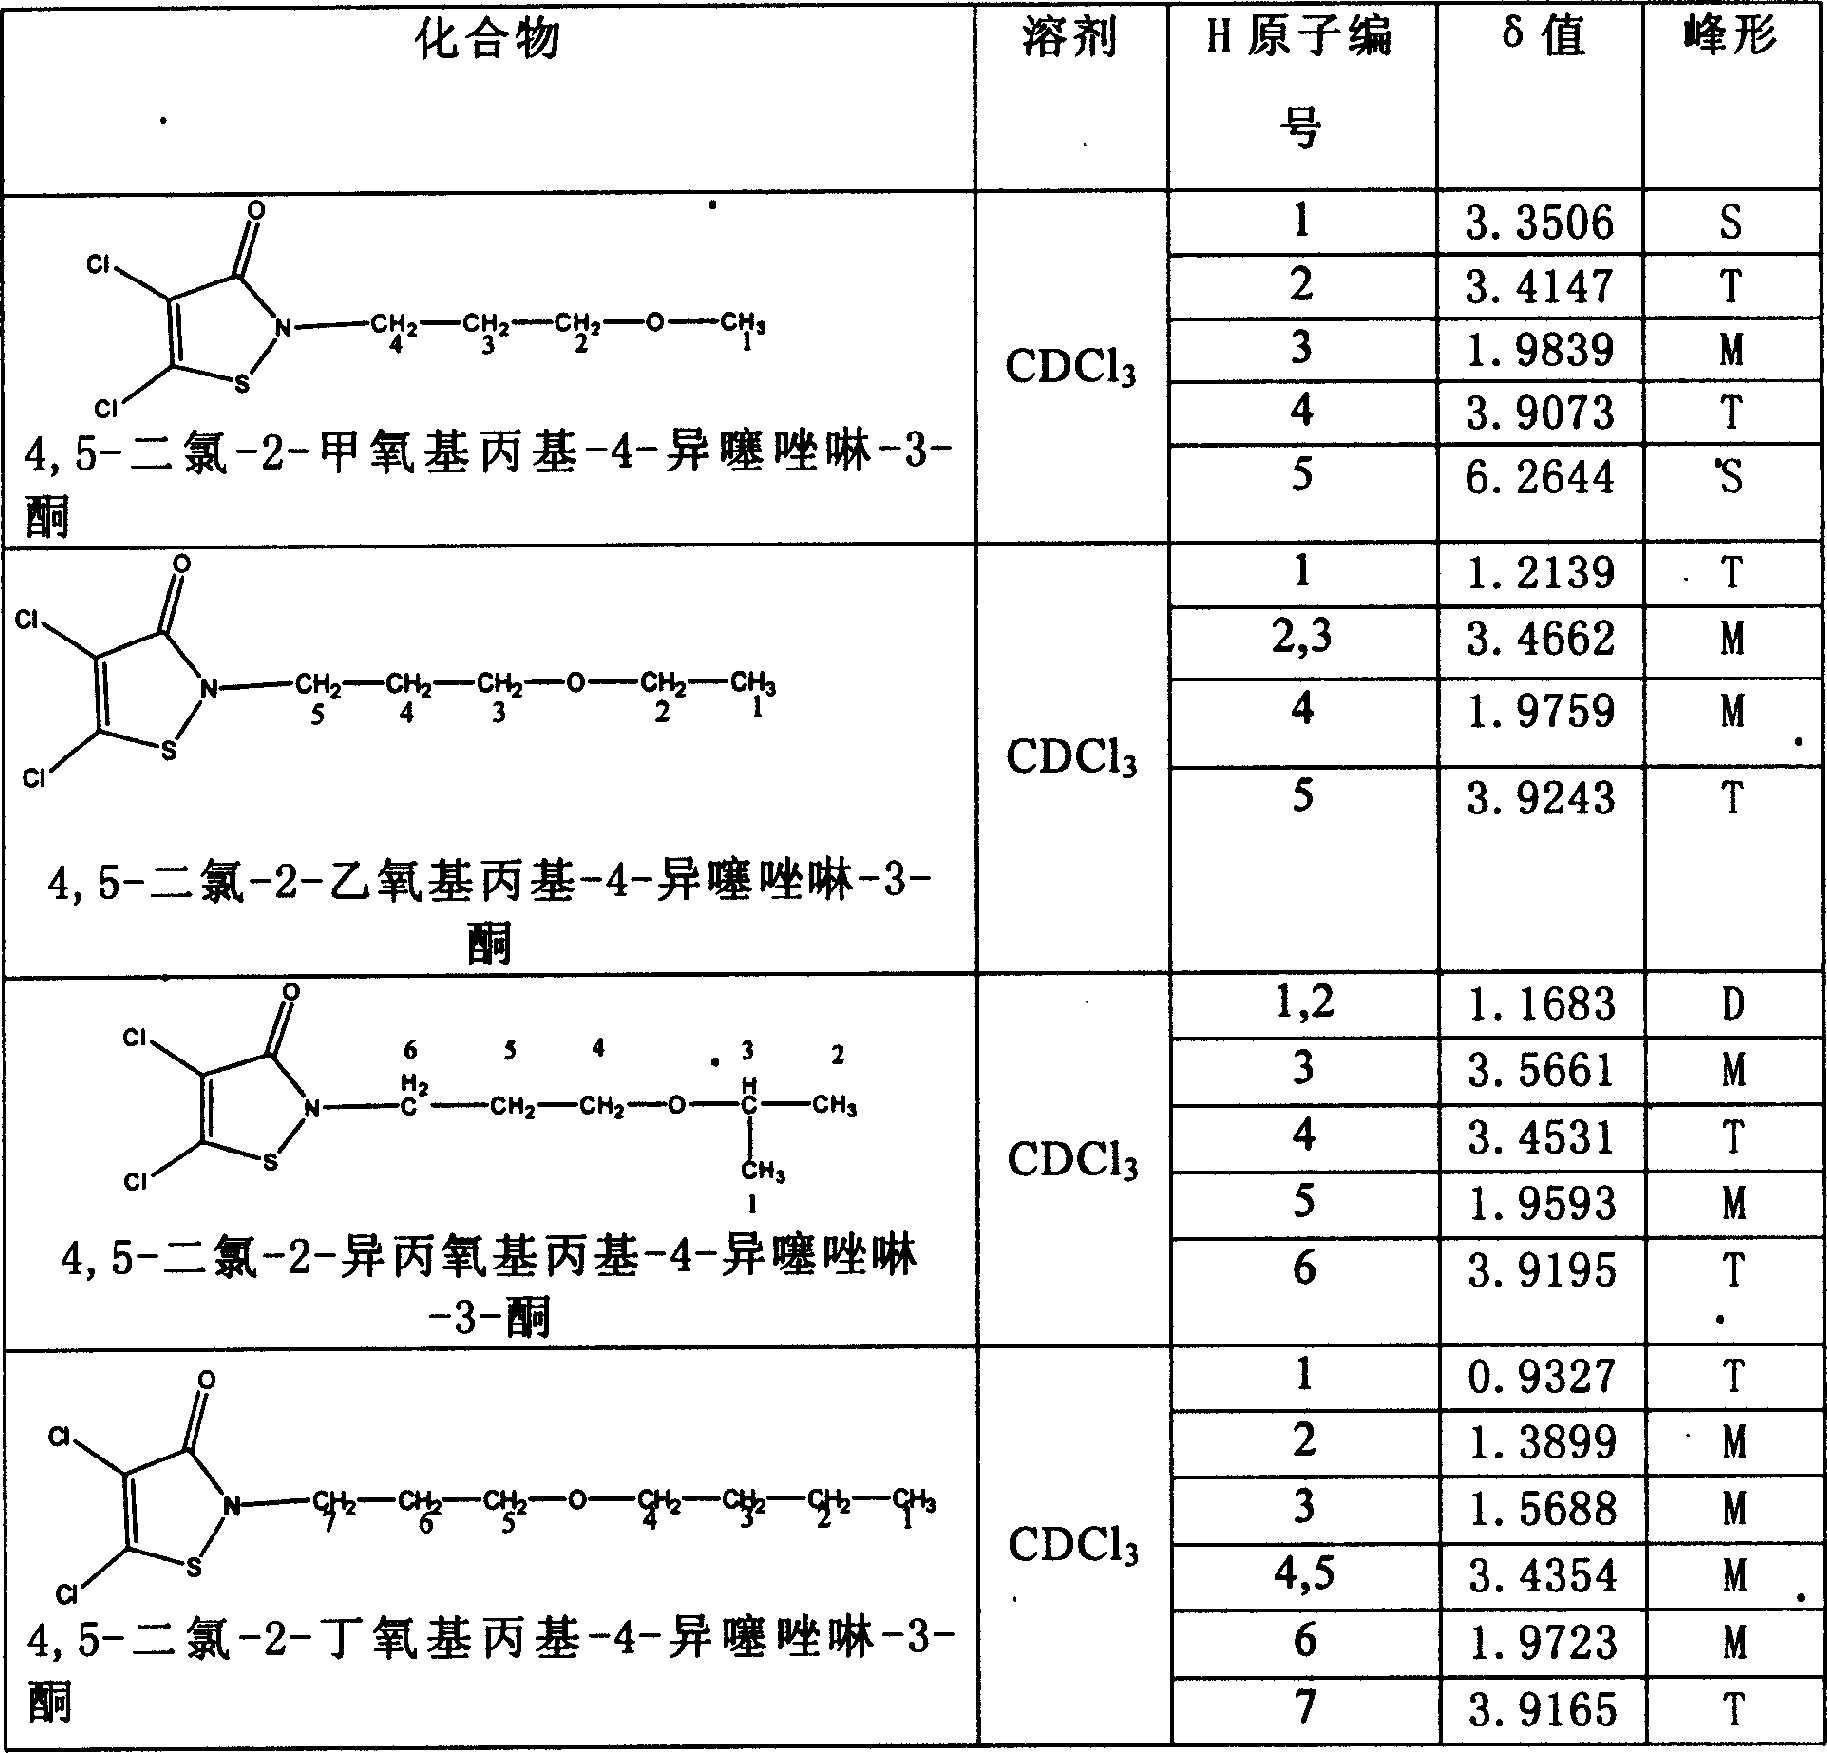 Alkoxy propyl isothiazolinone and its preparation process and use